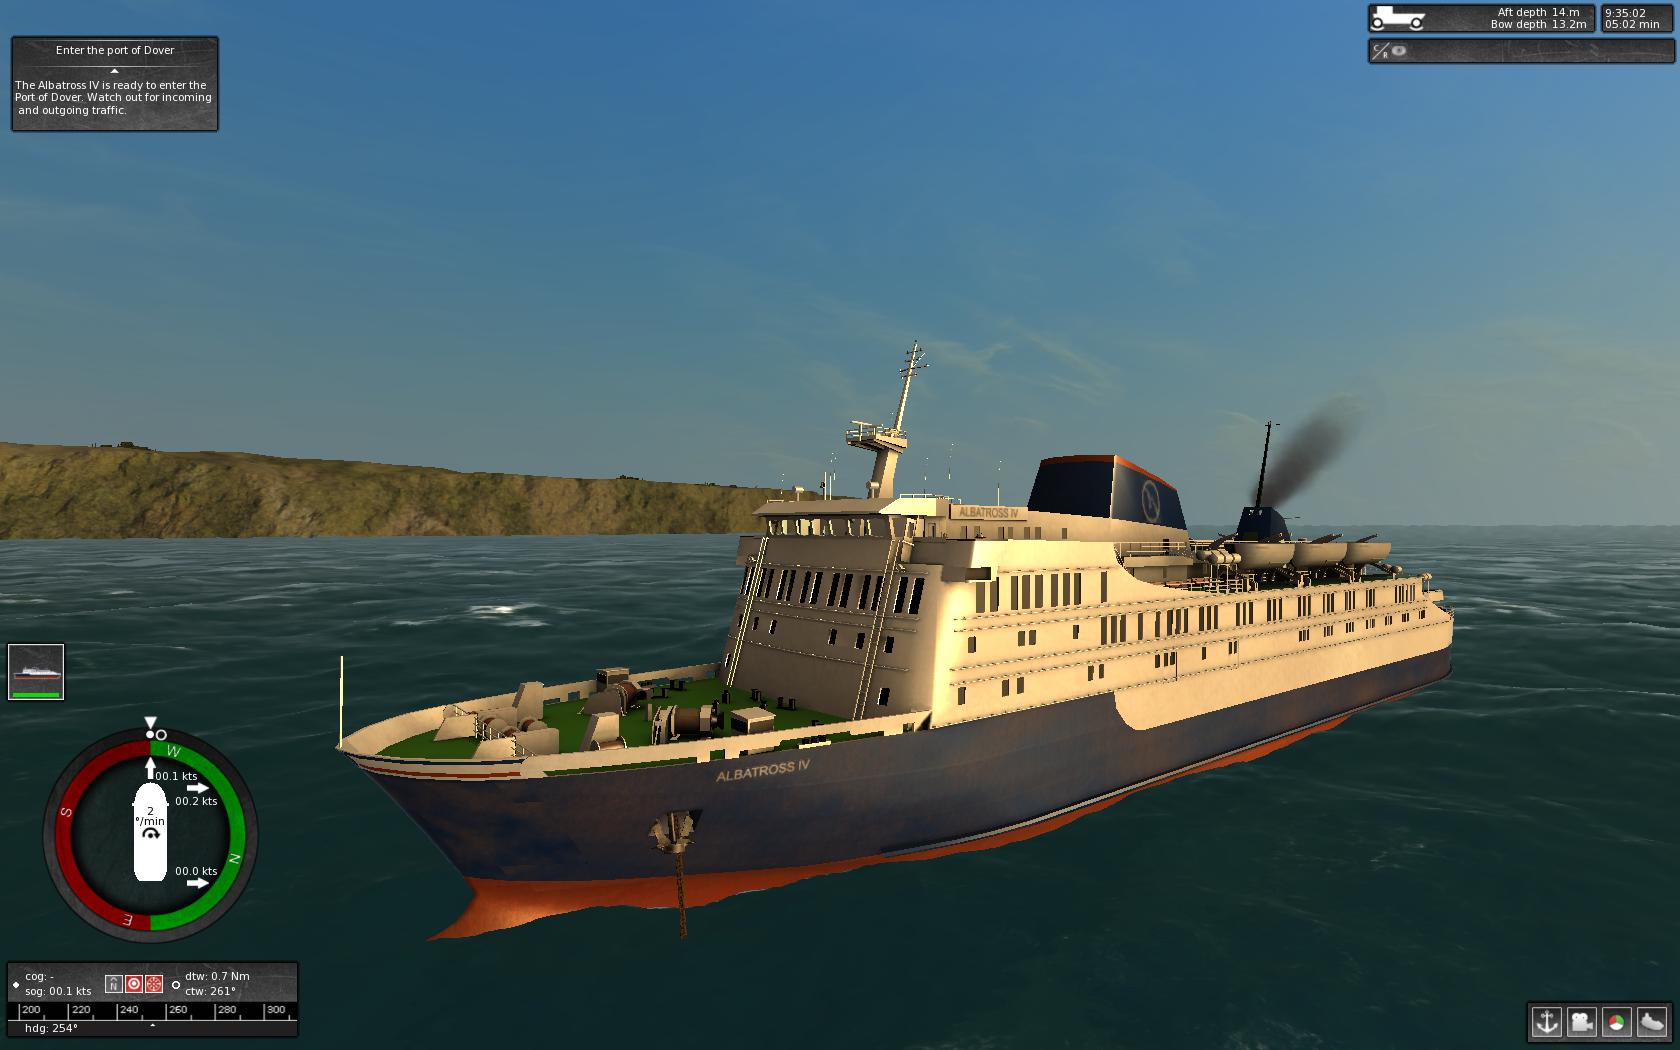 ship simulator extremes dll error